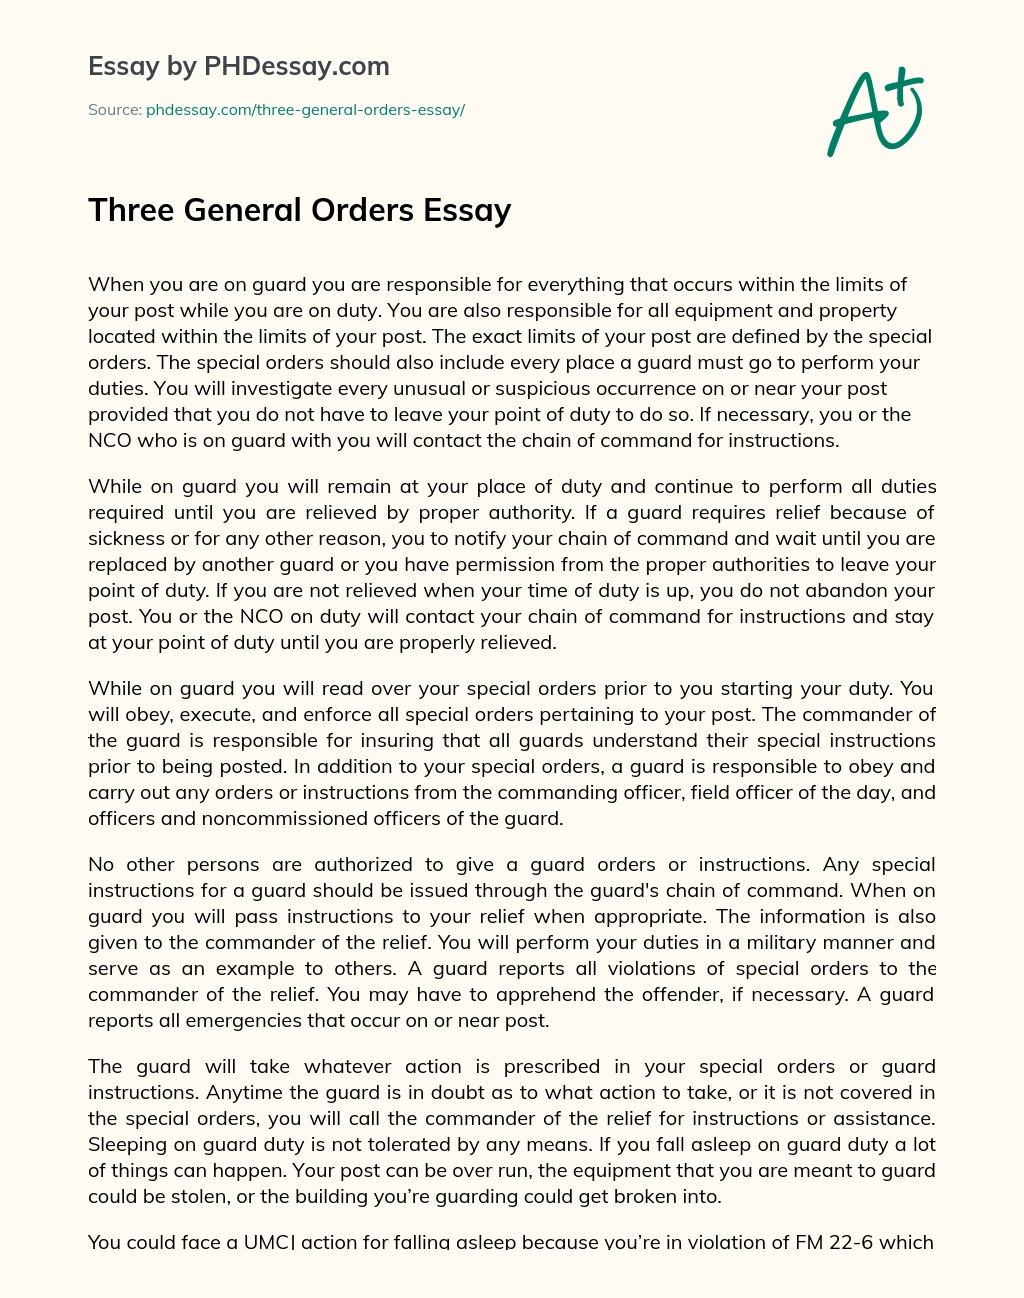 Three General Orders Essay essay